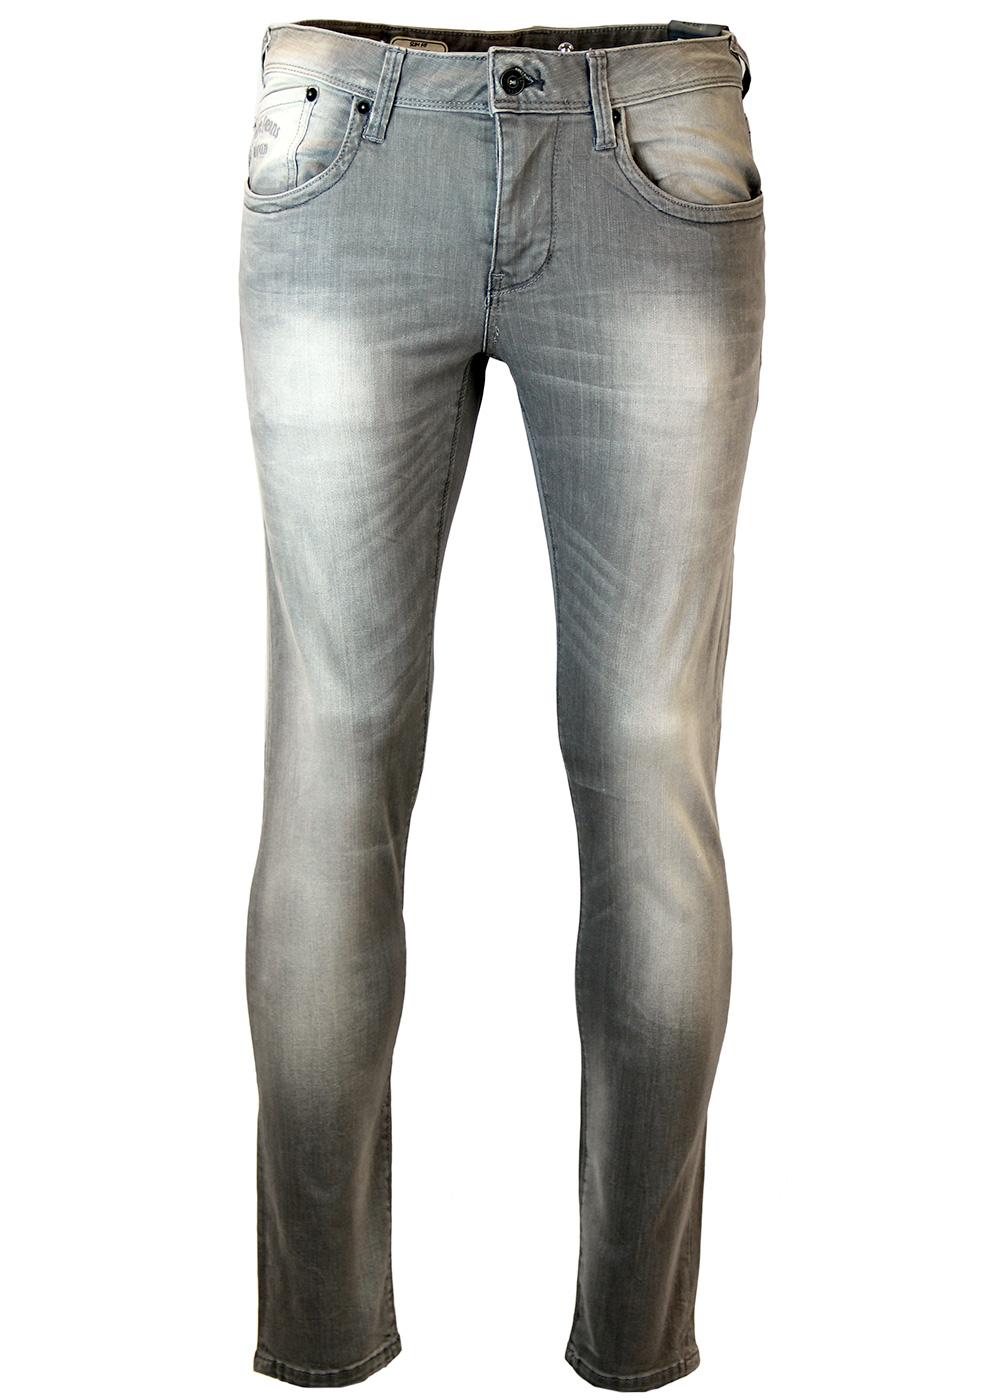 Hatch PEPE JEANS Retro Mod Slim Fit Jeans Grey